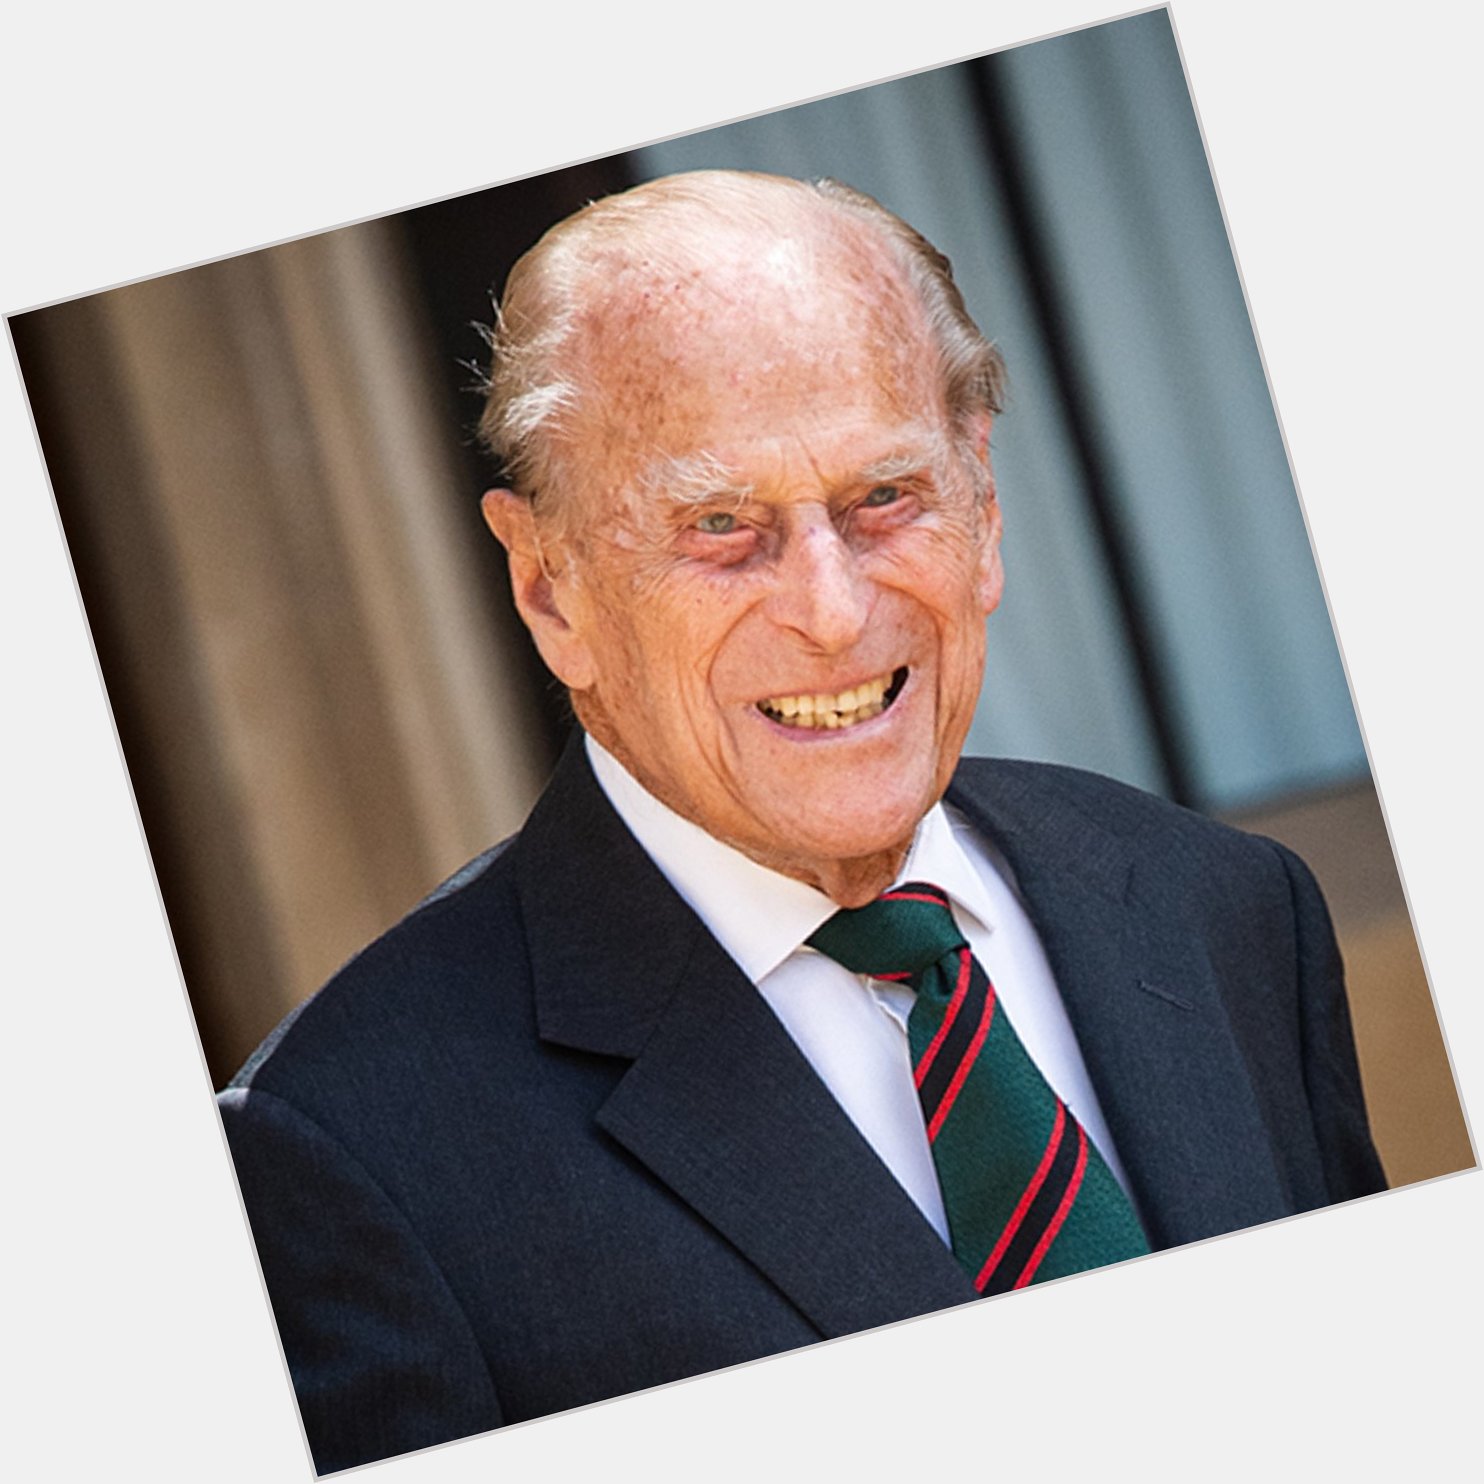 Happy birthday Prince Philip, Duke of Edinburgh and rest in peace
1921-2021 